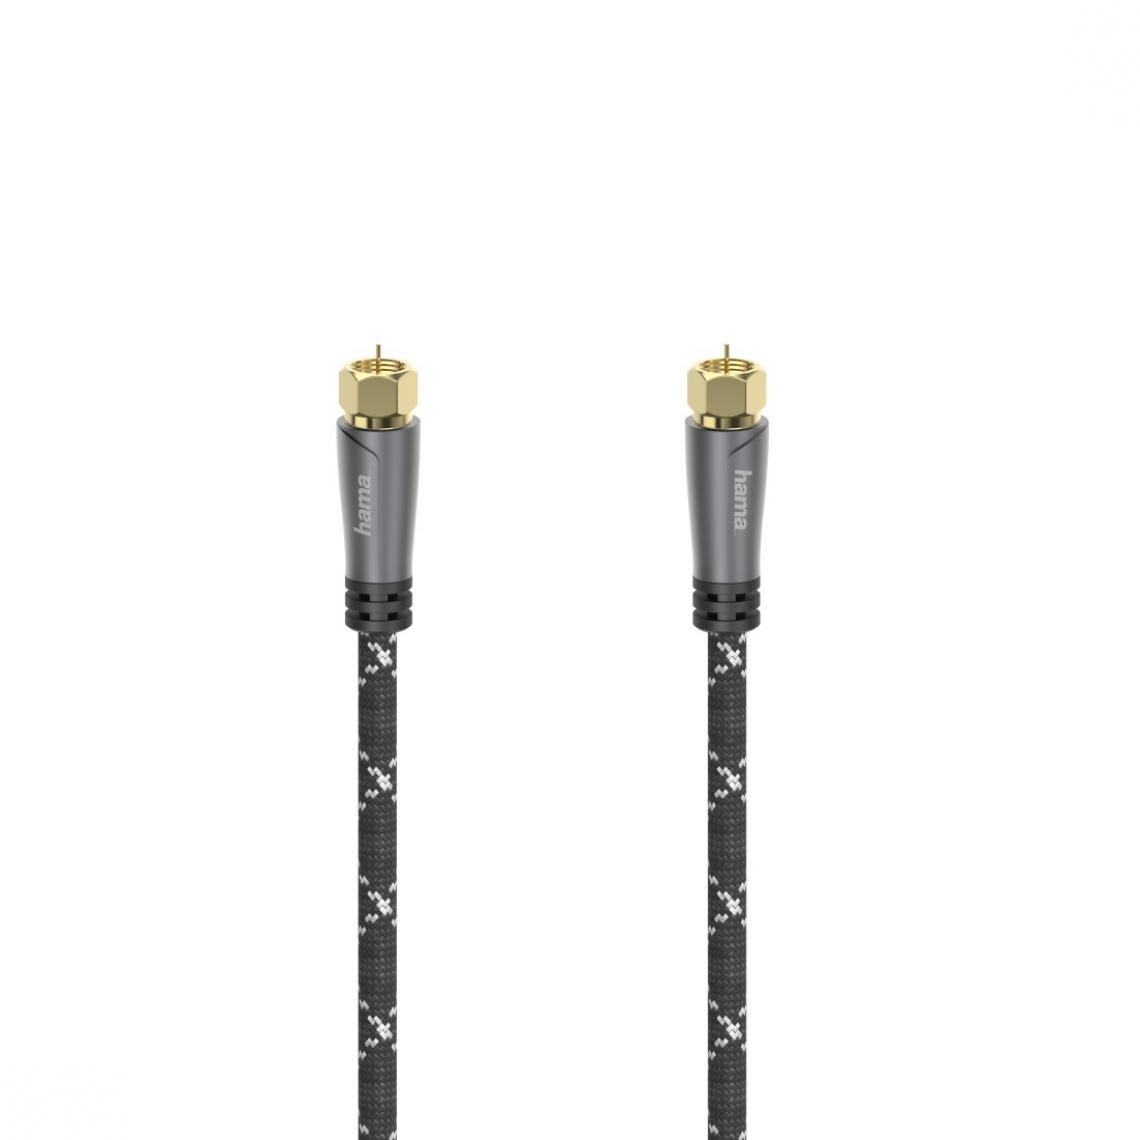 Hama - Cble de raccord SAT, f. mle F - f. mle F, métal, doré, 1,5 m, 120dB - Câble antenne